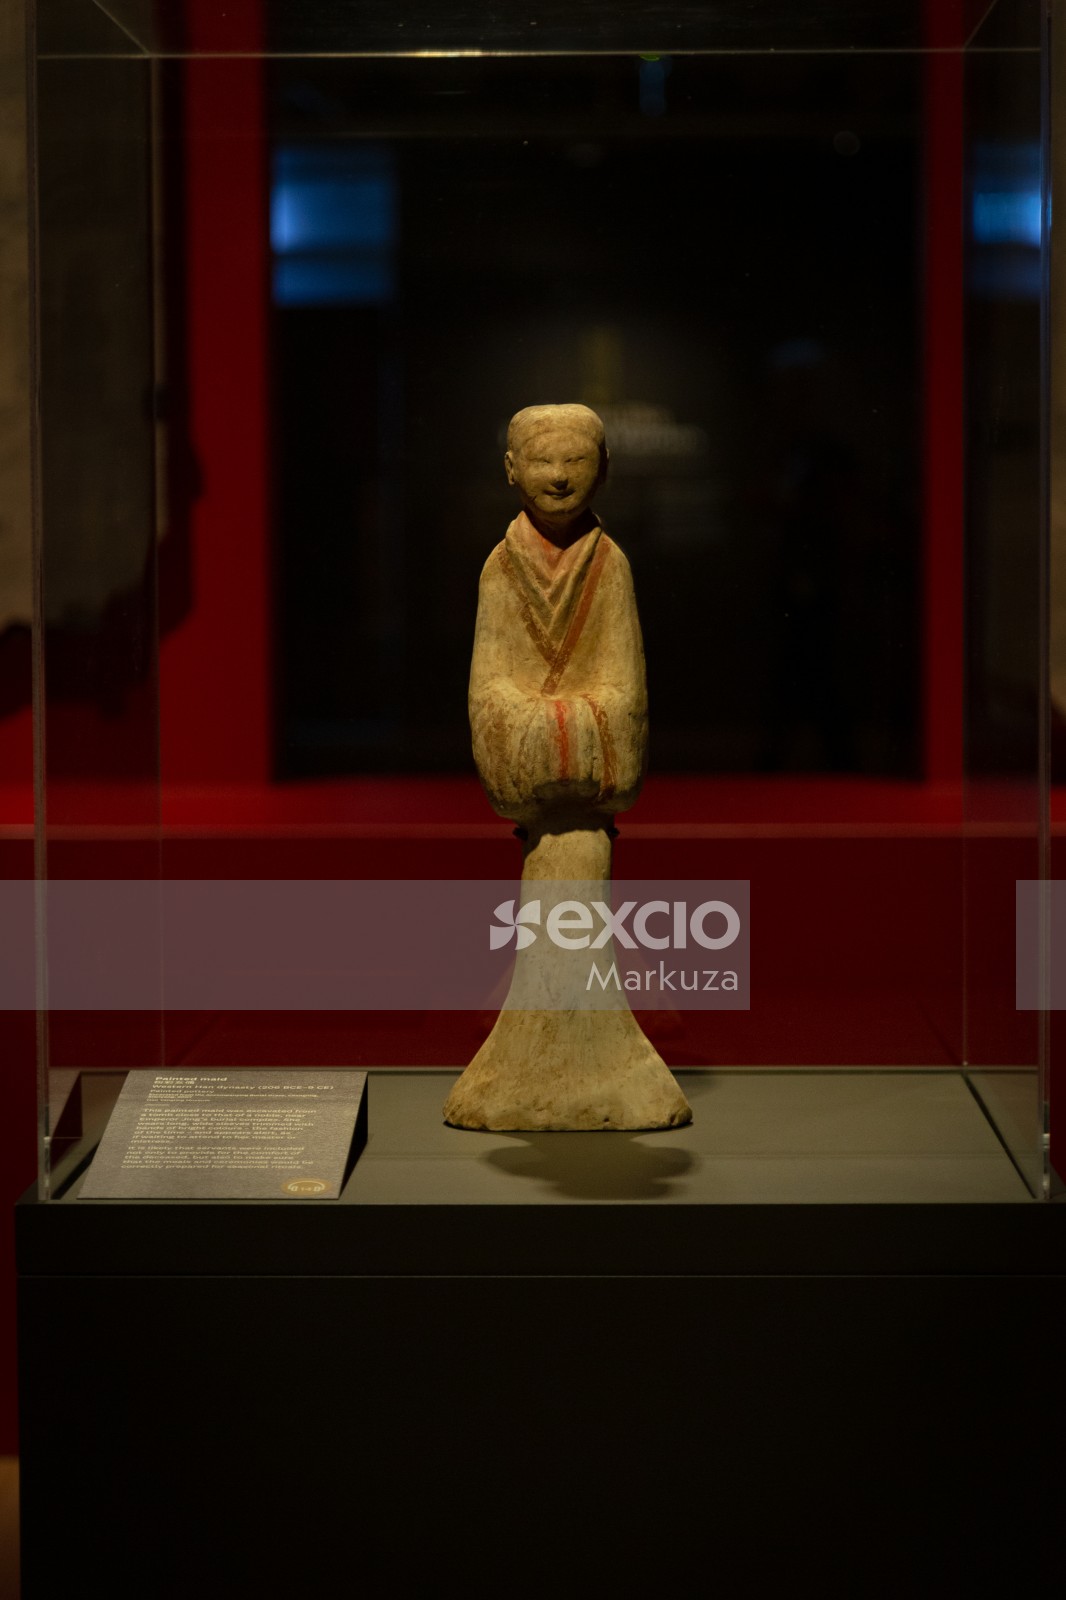 Western Han dynasty maid sculpture